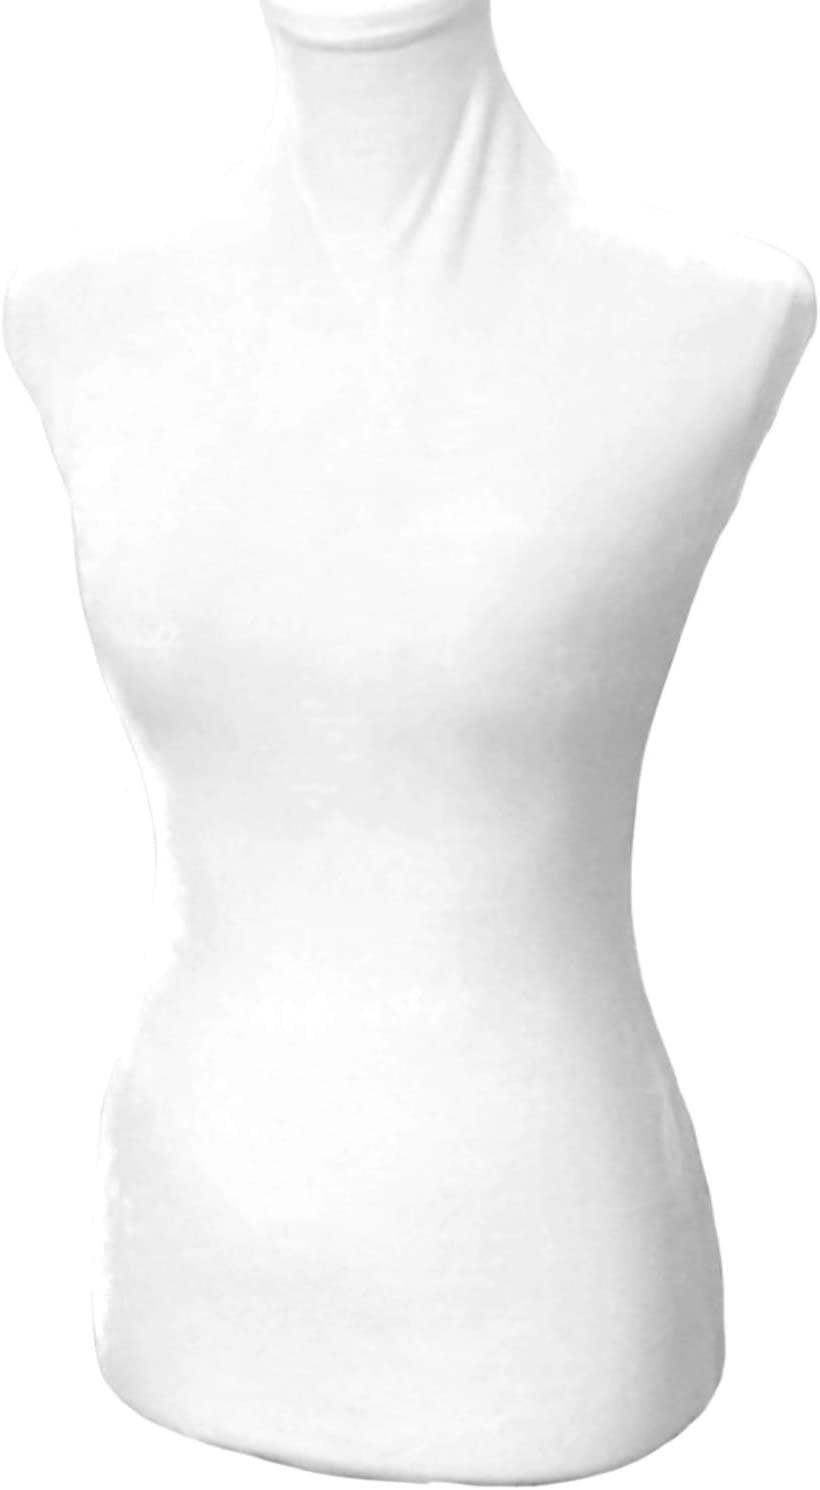 Black Superb Stretched Elastic Fabric Top Cover For Mannequin Torso Dummy Model 